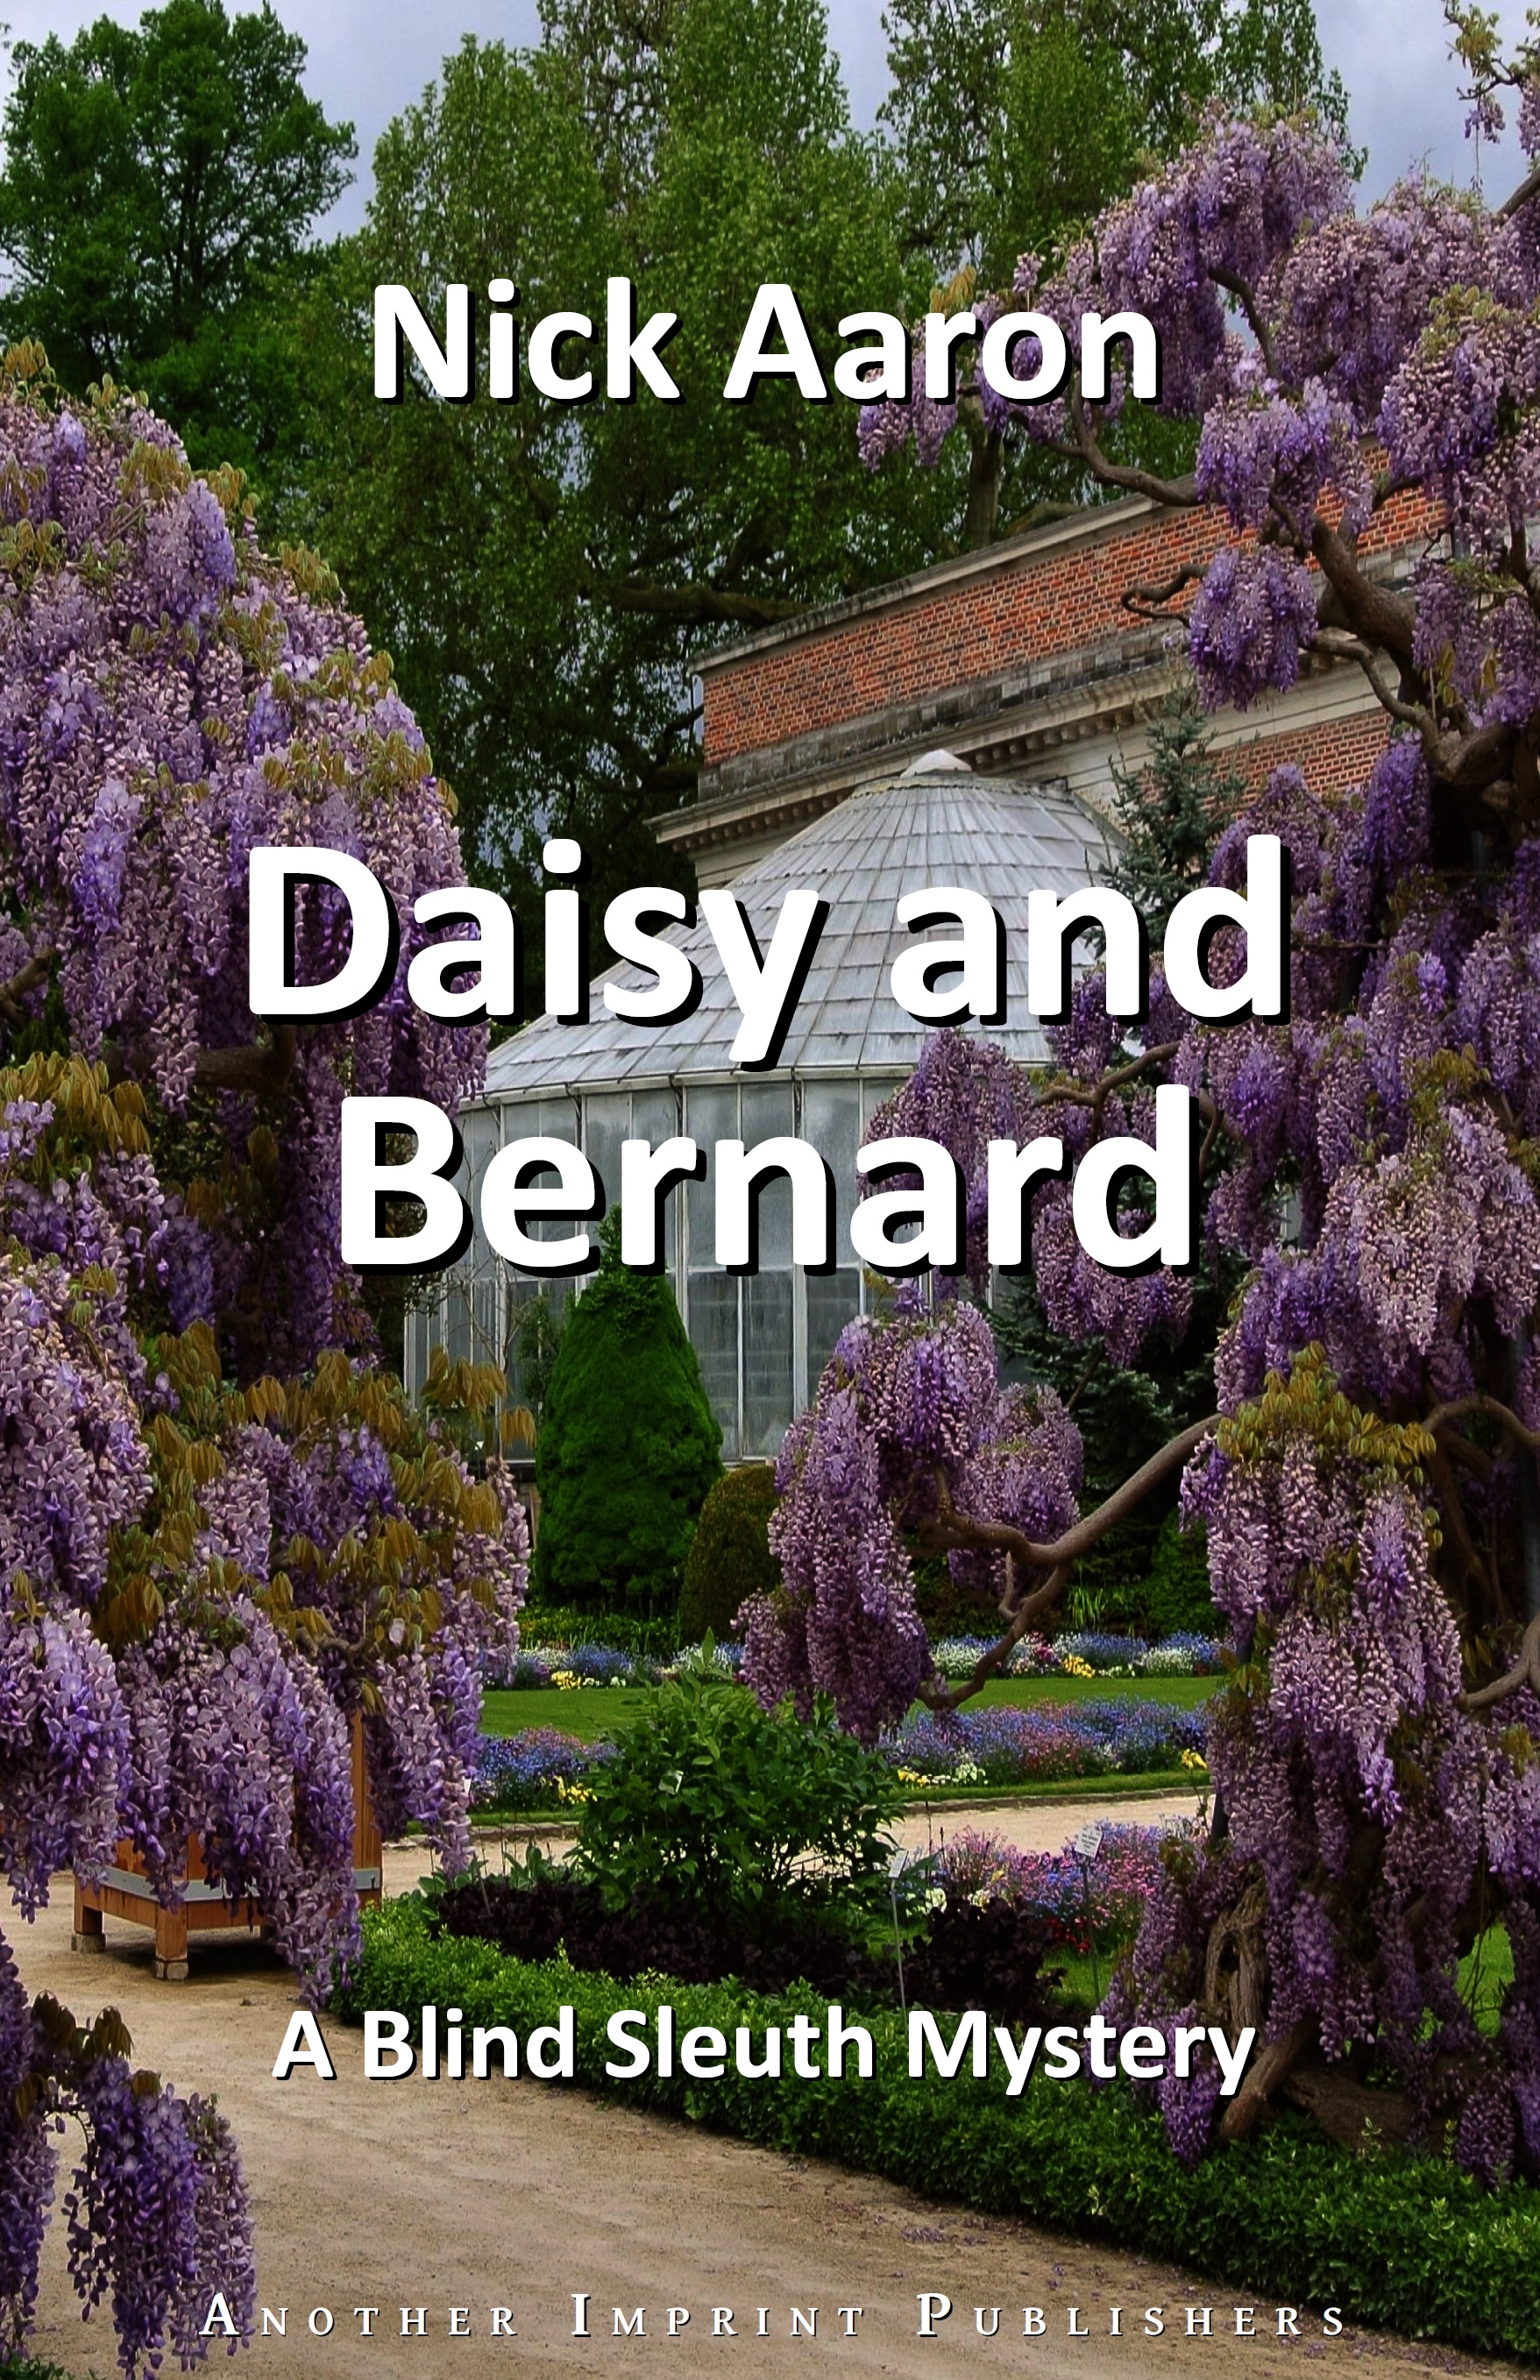 Book cover Daisy and Bernard: View of a botanical garden